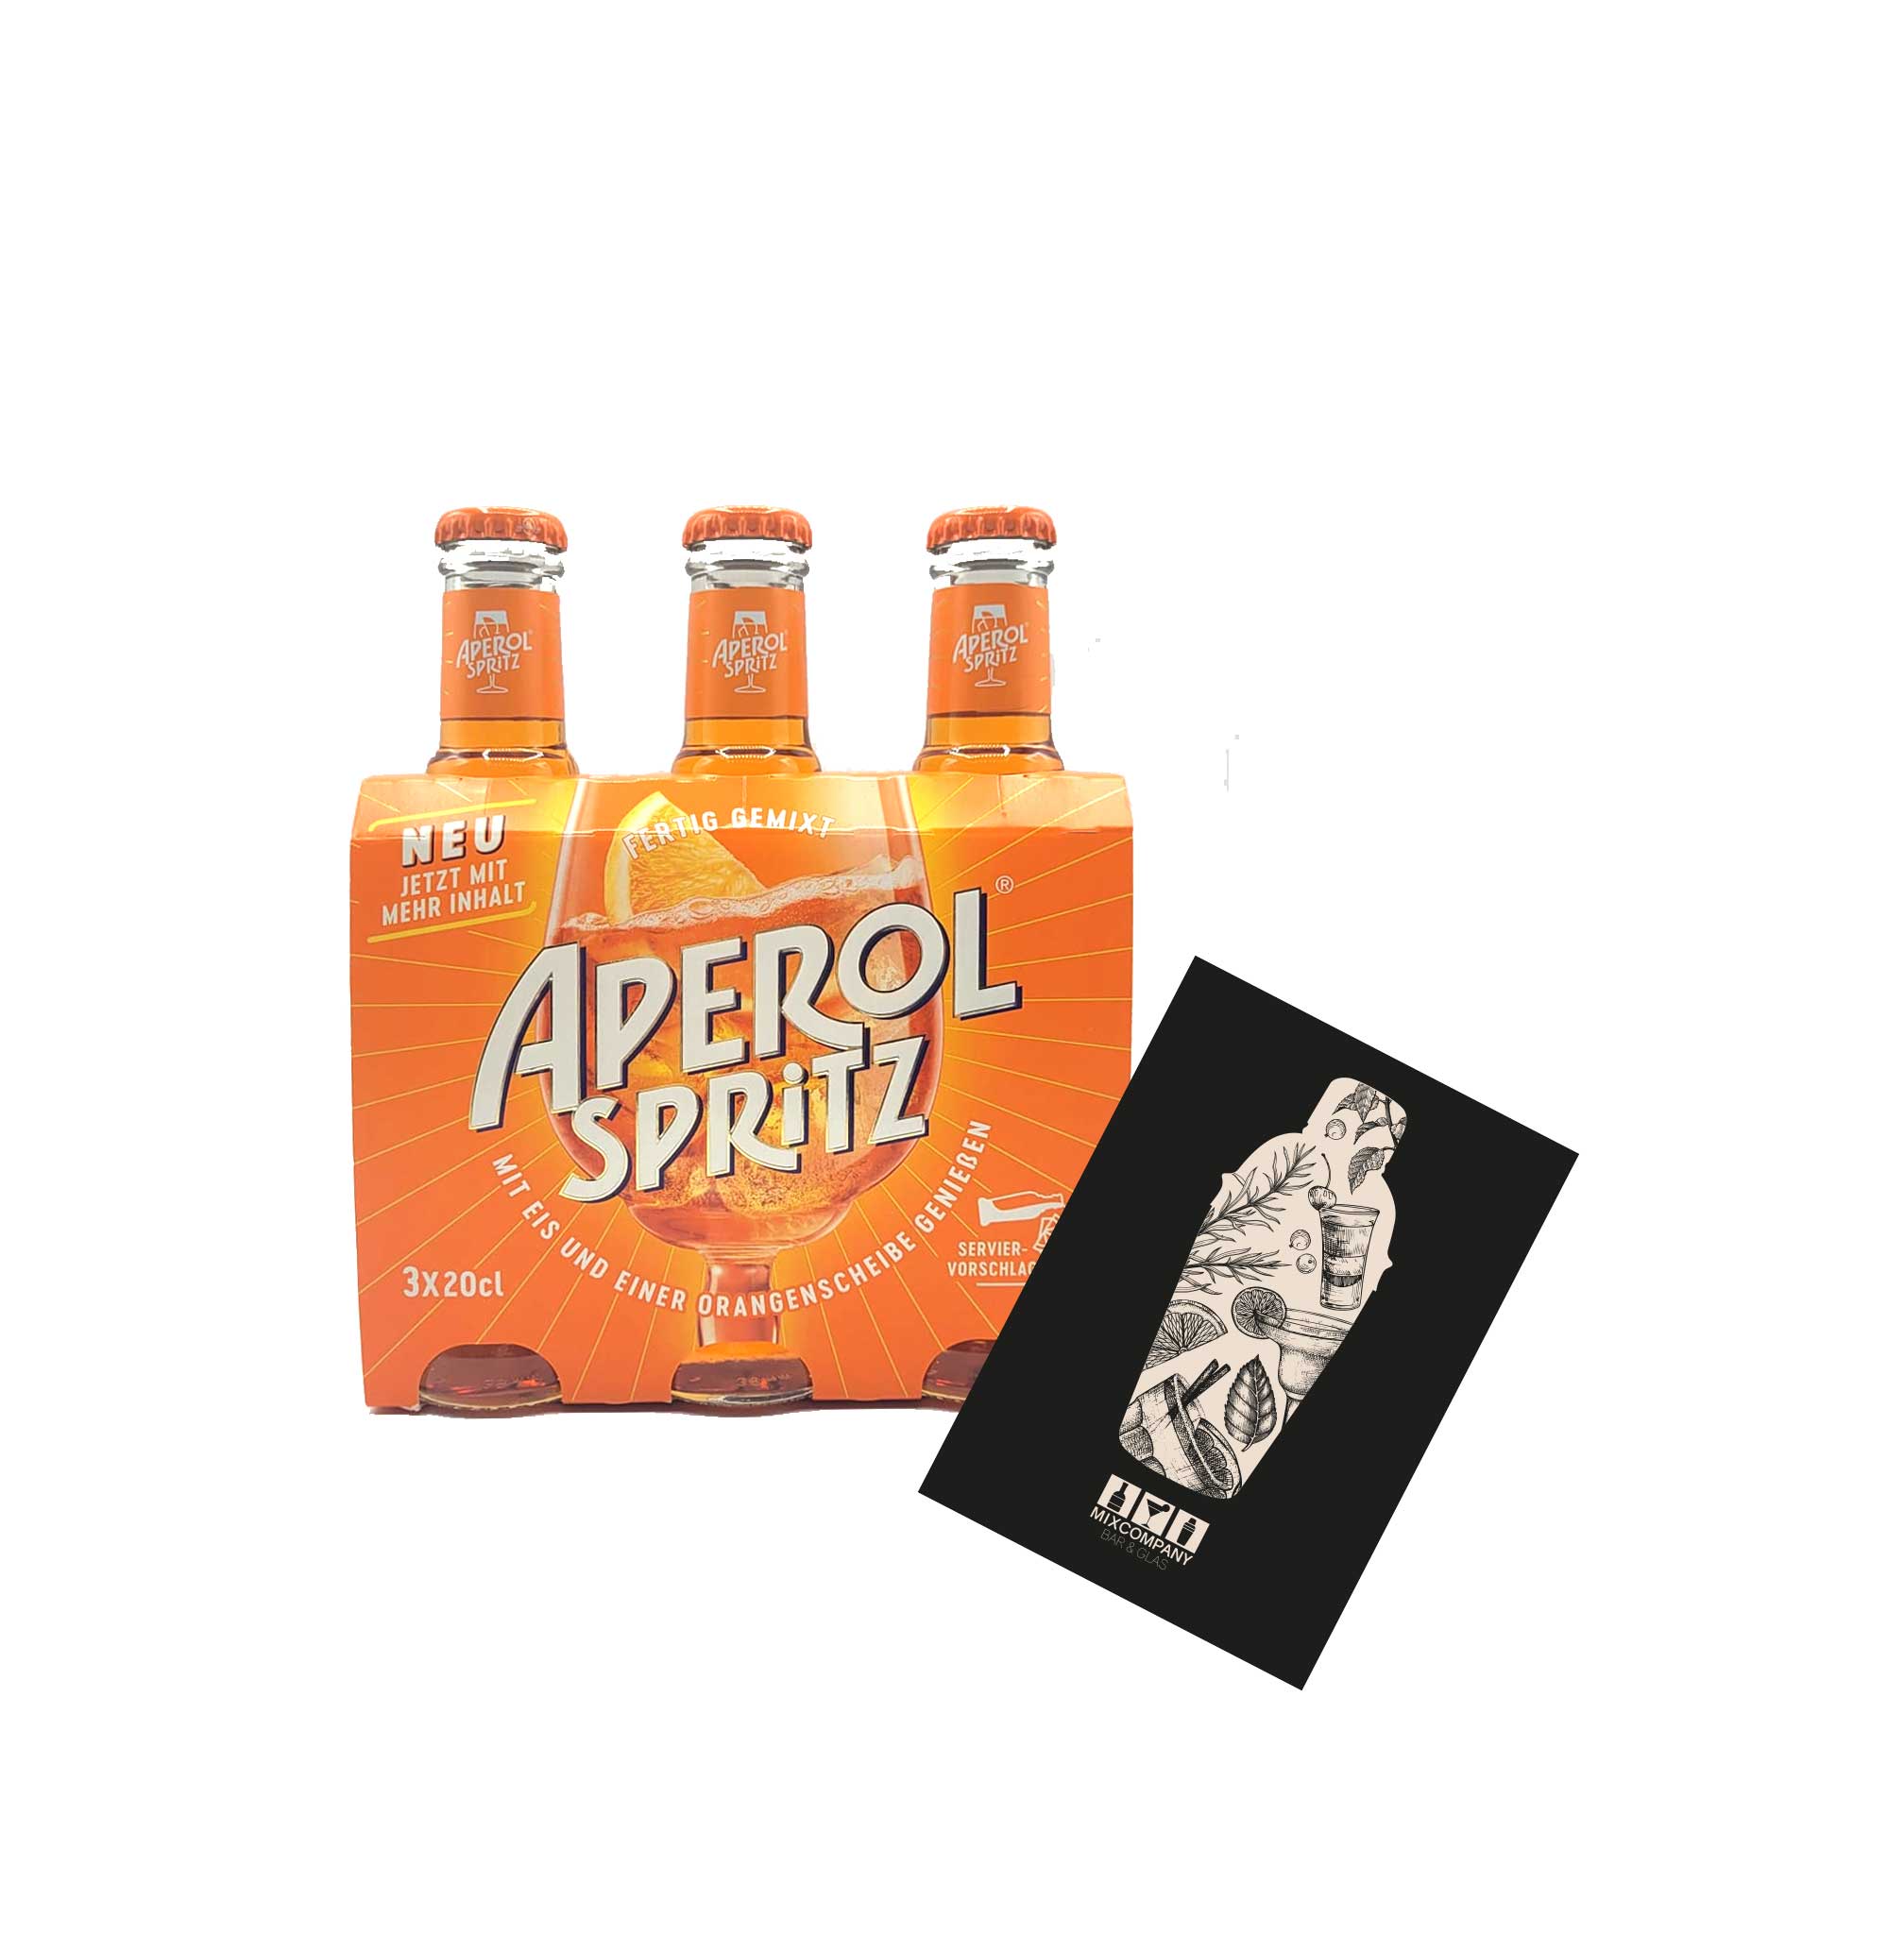 Aperol Spritz 3x 0,2l (10,5% Vol) ready to drink Aperitivo / Aperitif - [Enthält Sulfite]